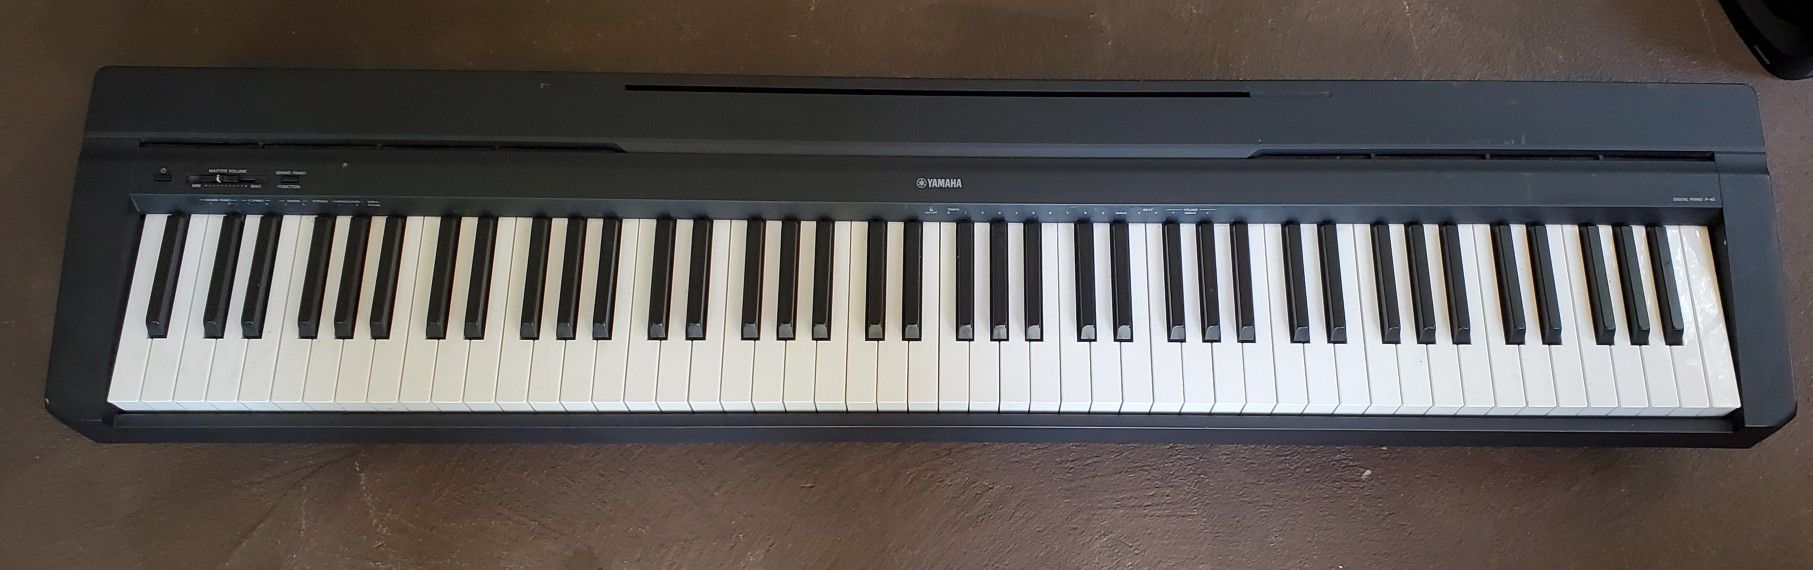 Yamaha P-45 Digital Piano, 88 weighted keys, PLUS FREE Casio keyboard